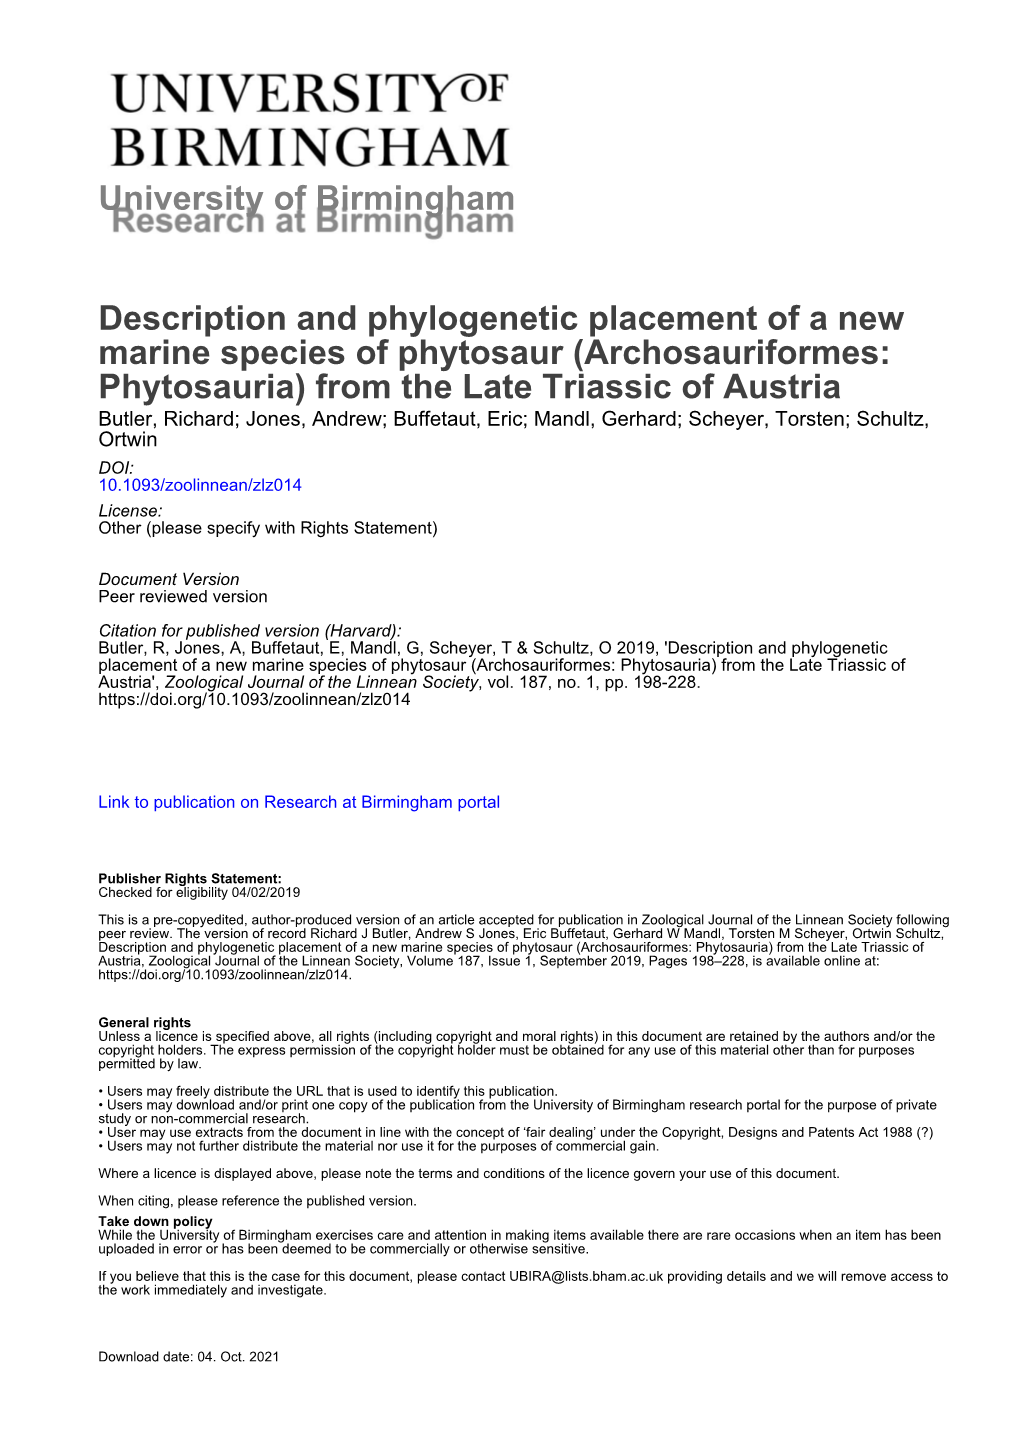 University of Birmingham Description and Phylogenetic